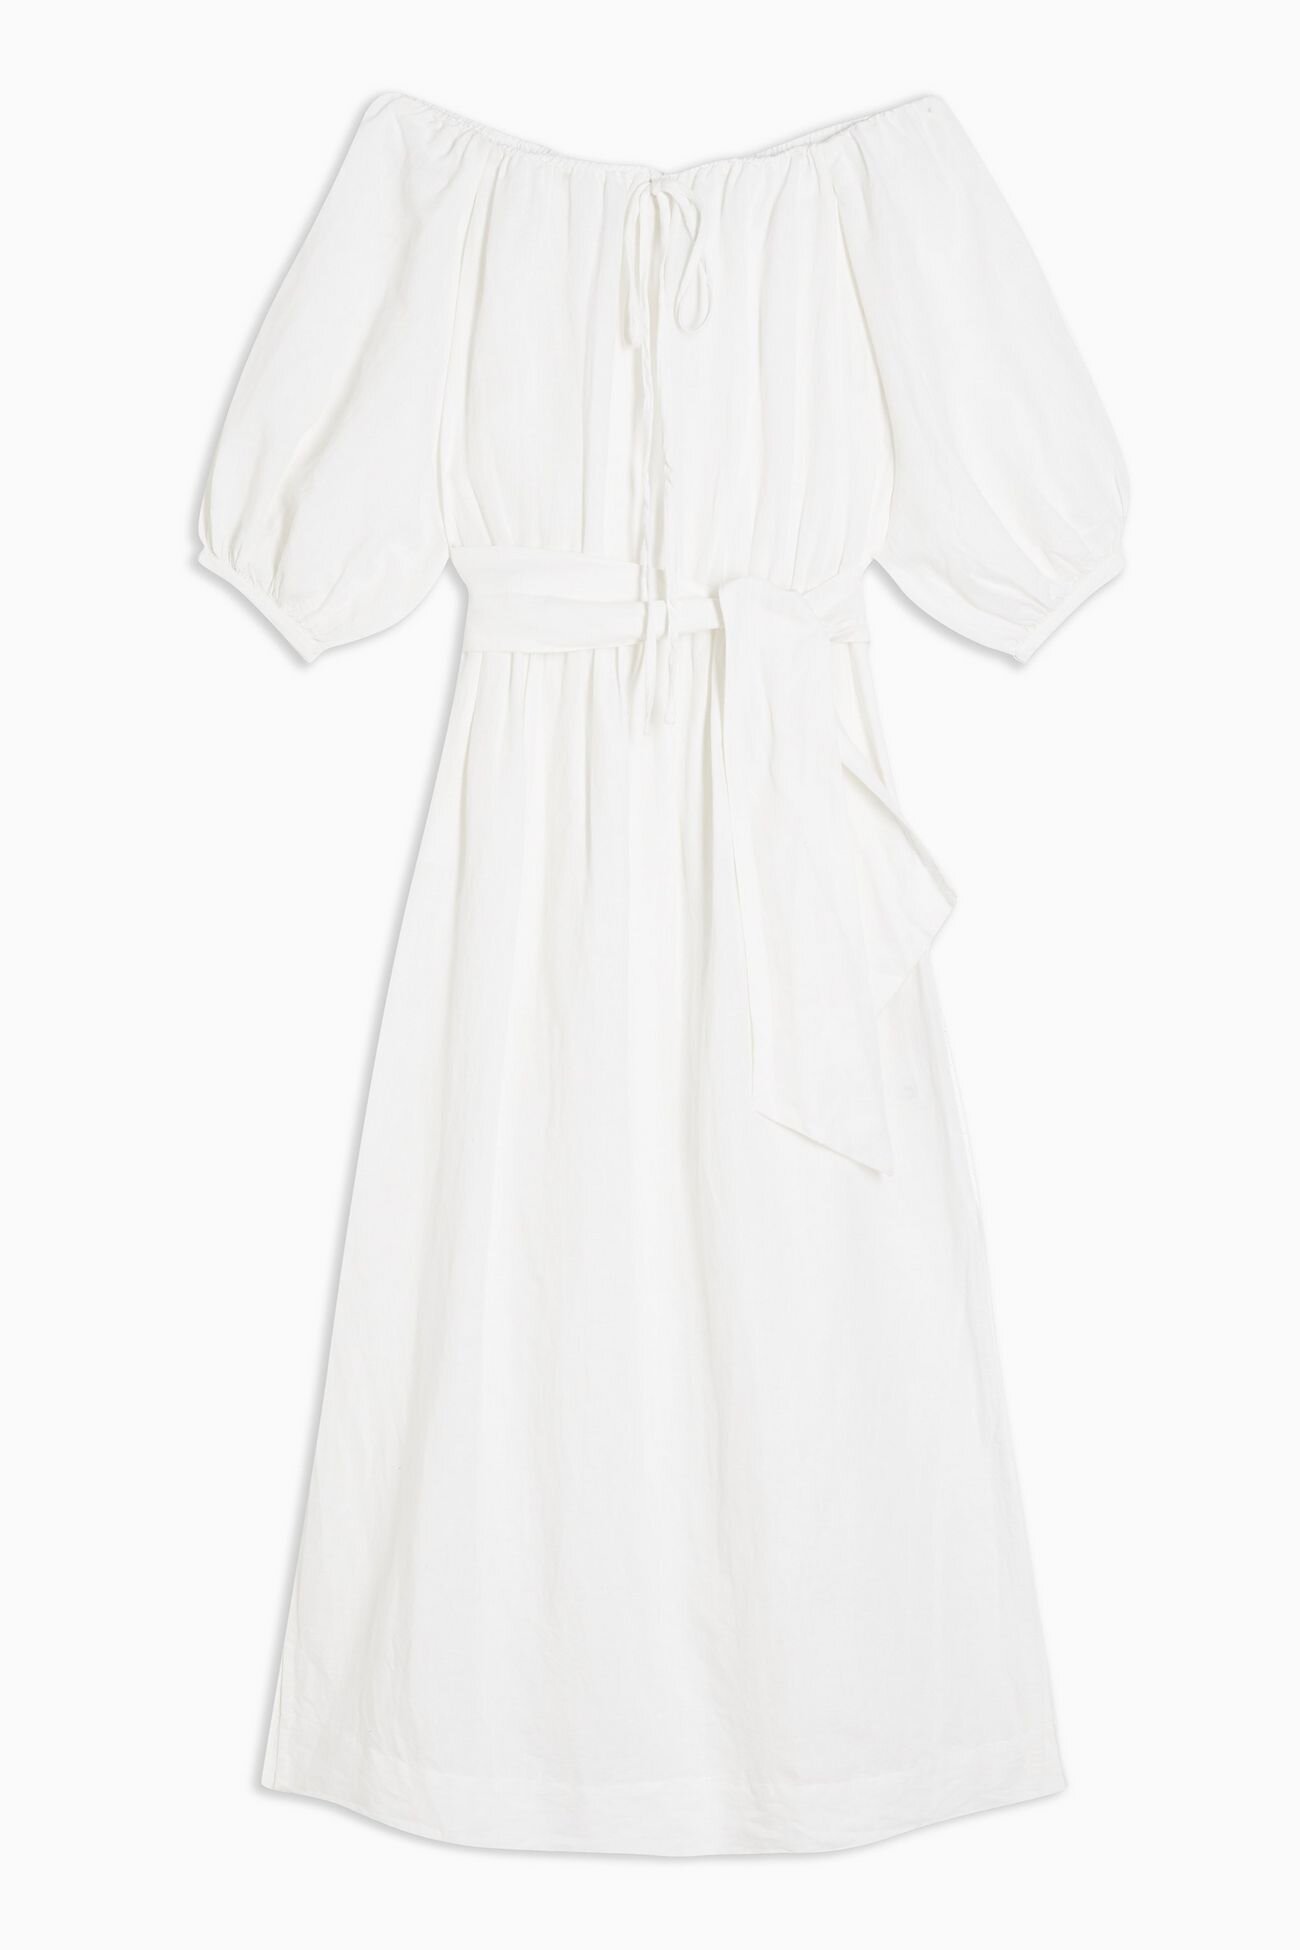 Dress, £39, Topshop